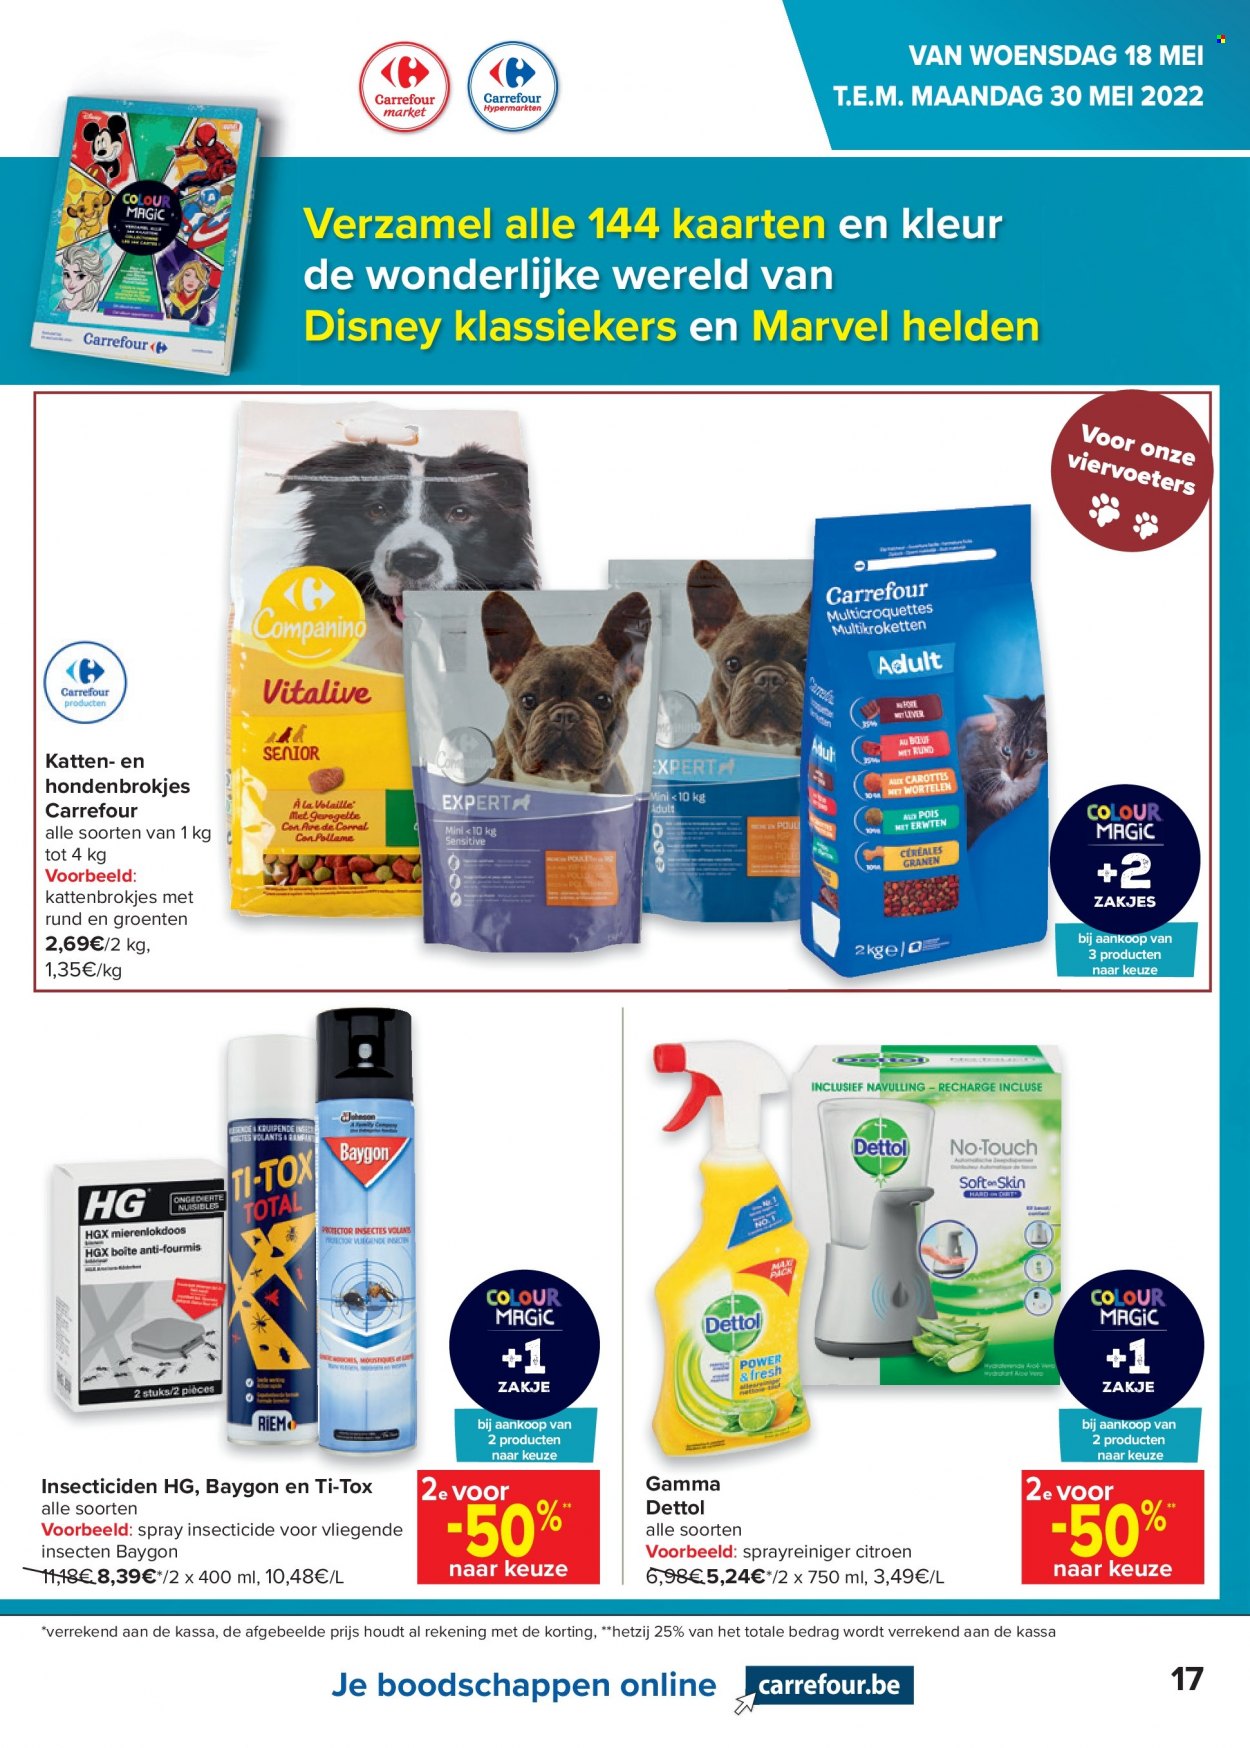 thumbnail - Carrefour-aanbieding - 18/05/2022 - 30/05/2022 -  producten in de aanbieding - Disney, citroen, Dettol, Gamma. Pagina 17.